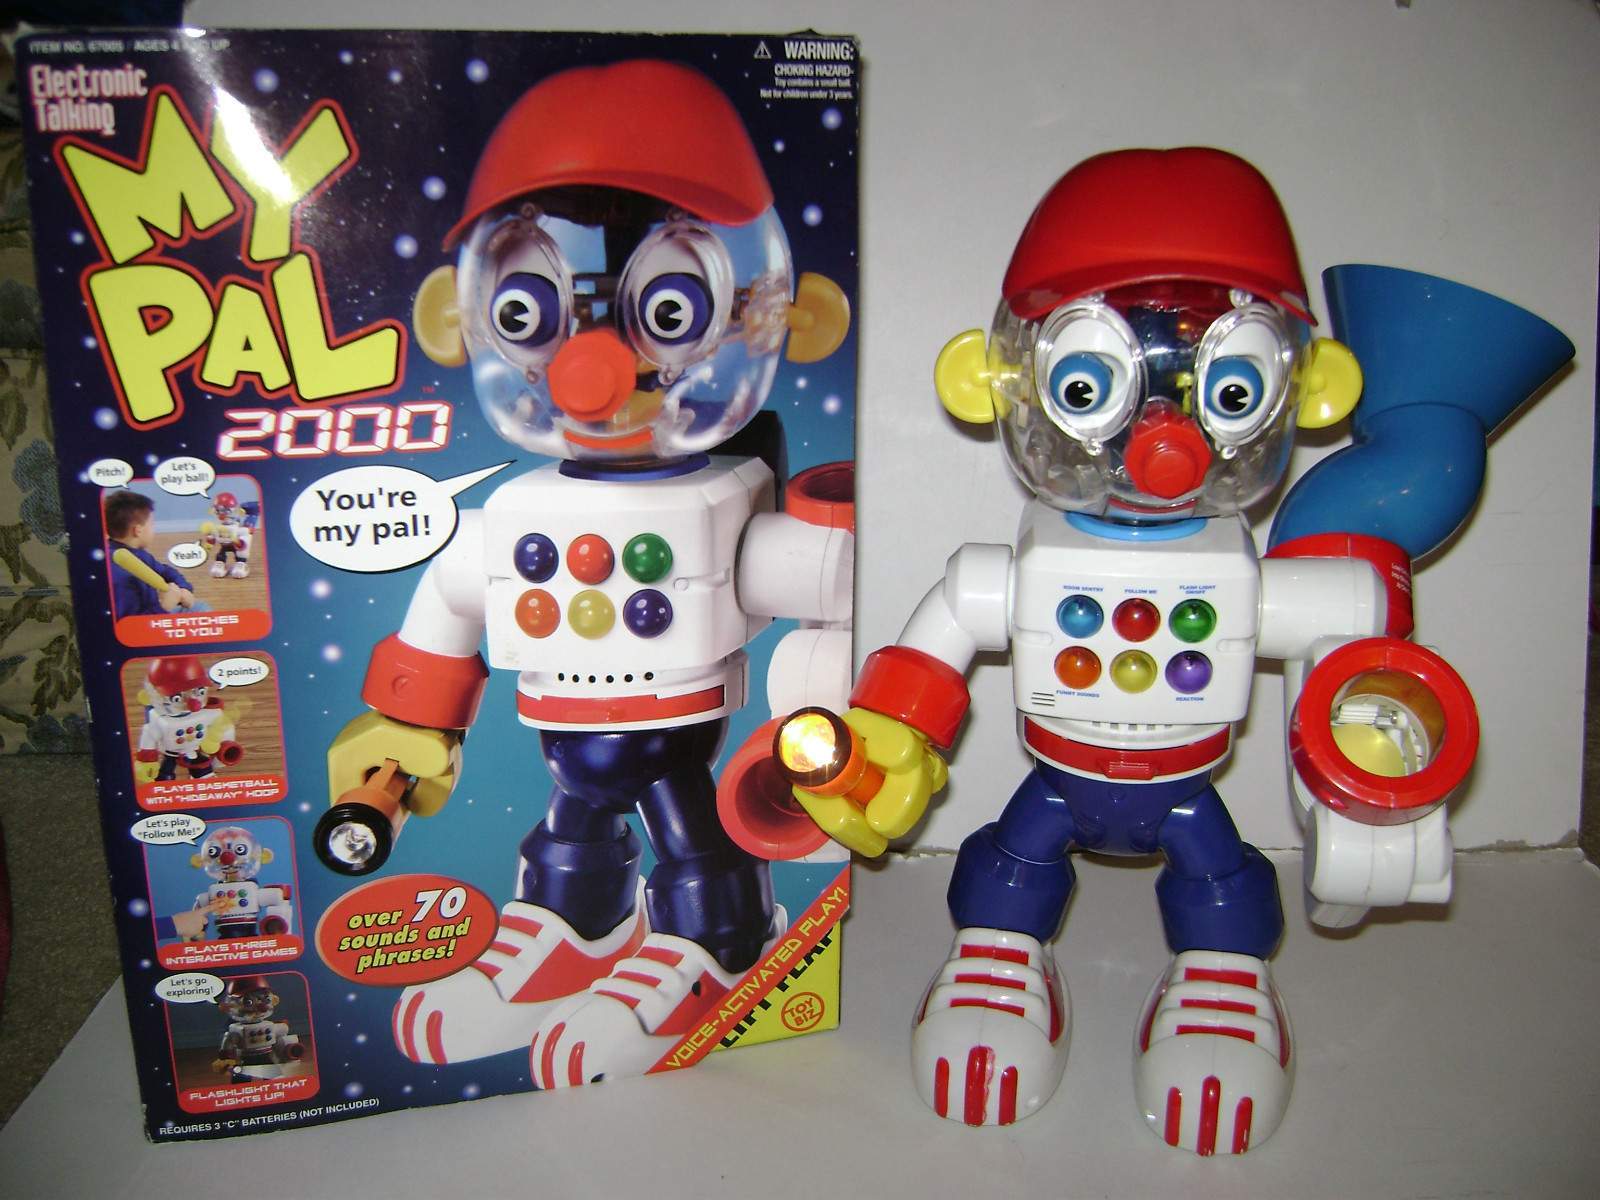 My Pal 2000 Robot - The Old Robots Web Site